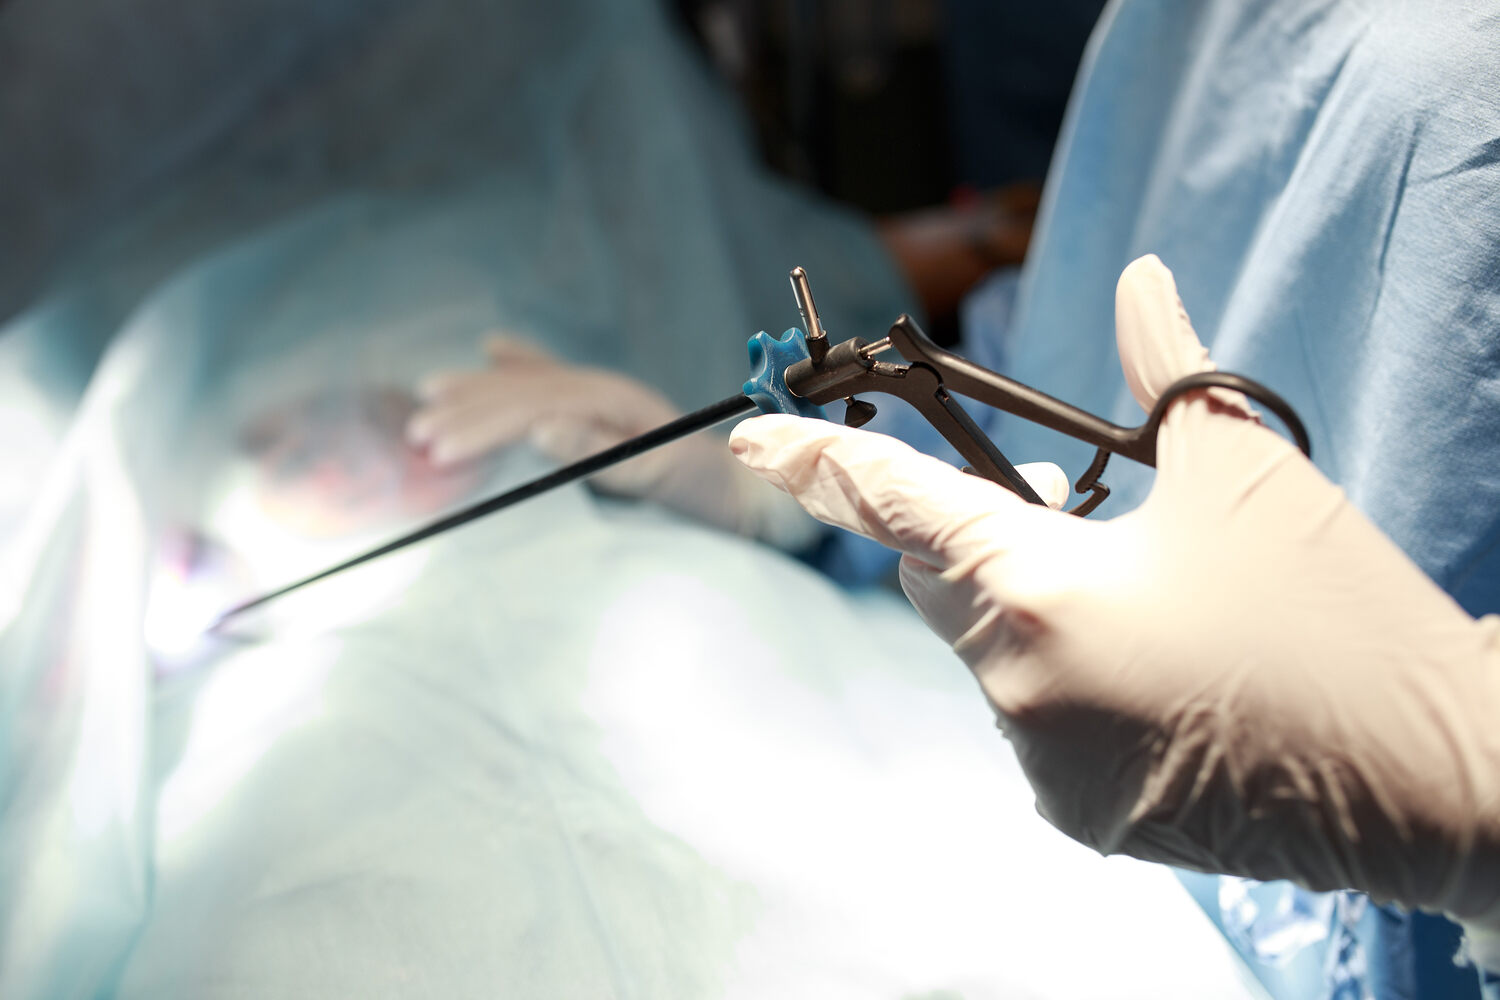 laparoscopy for uterine abnormality